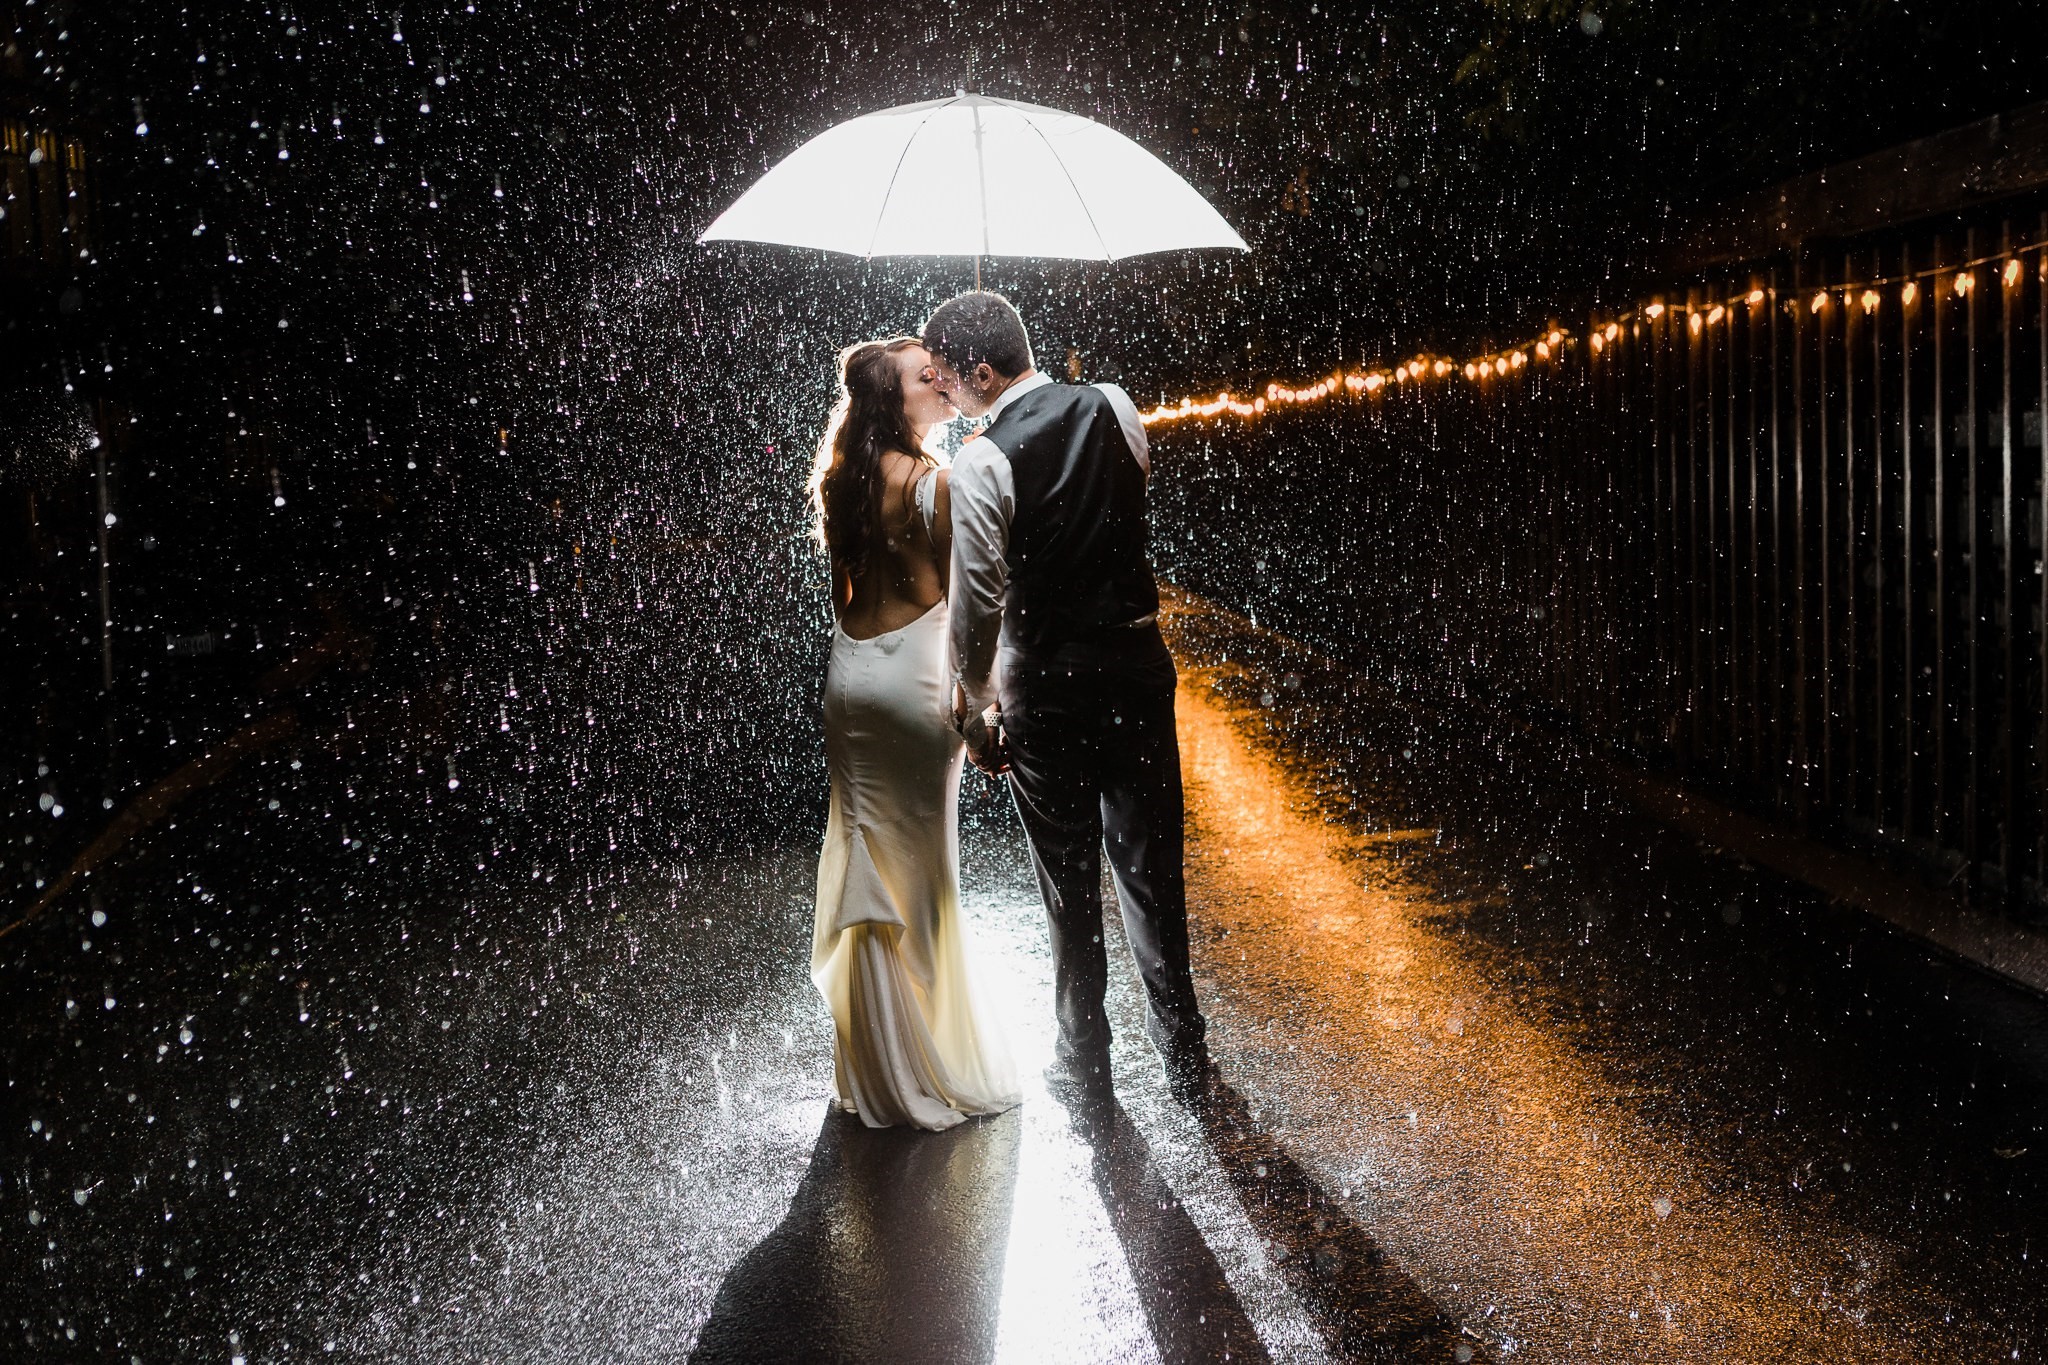 Bride and groom kissing under umbrella in the rain